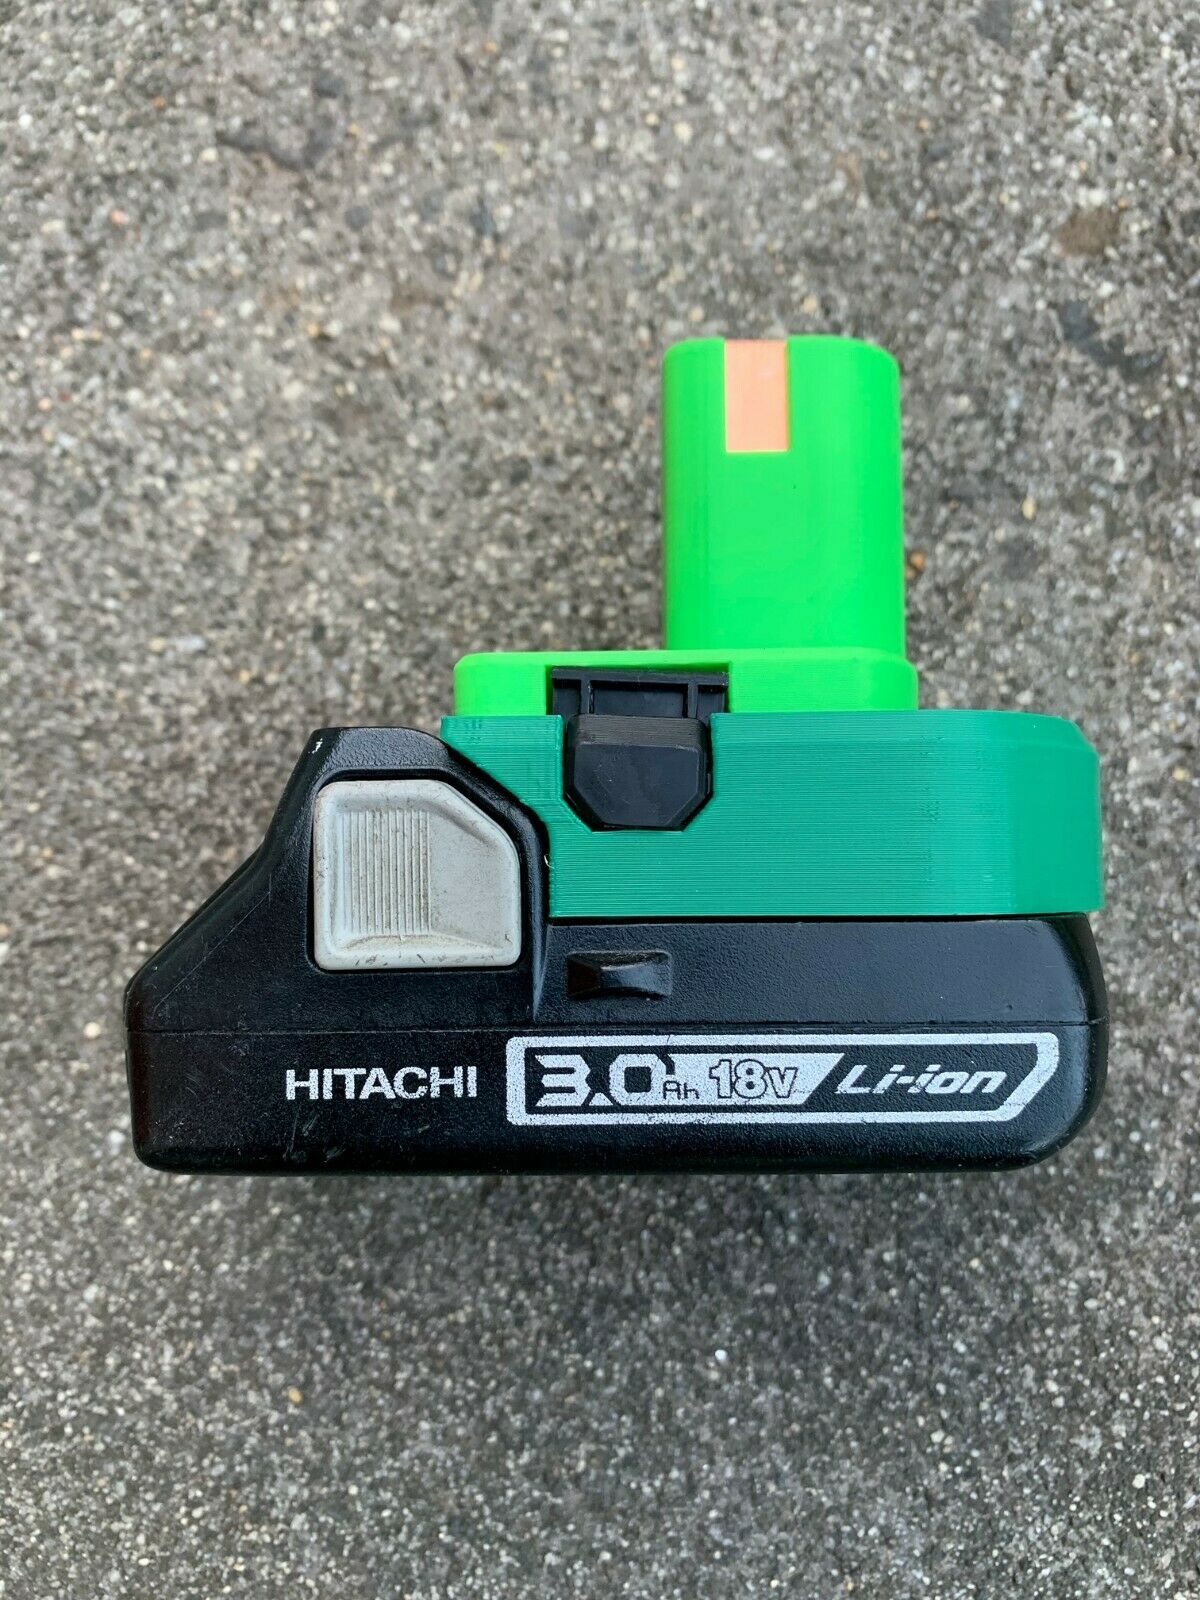 Hitachi / Hikoki 18v battery adaptor to Ryobi One+ tools